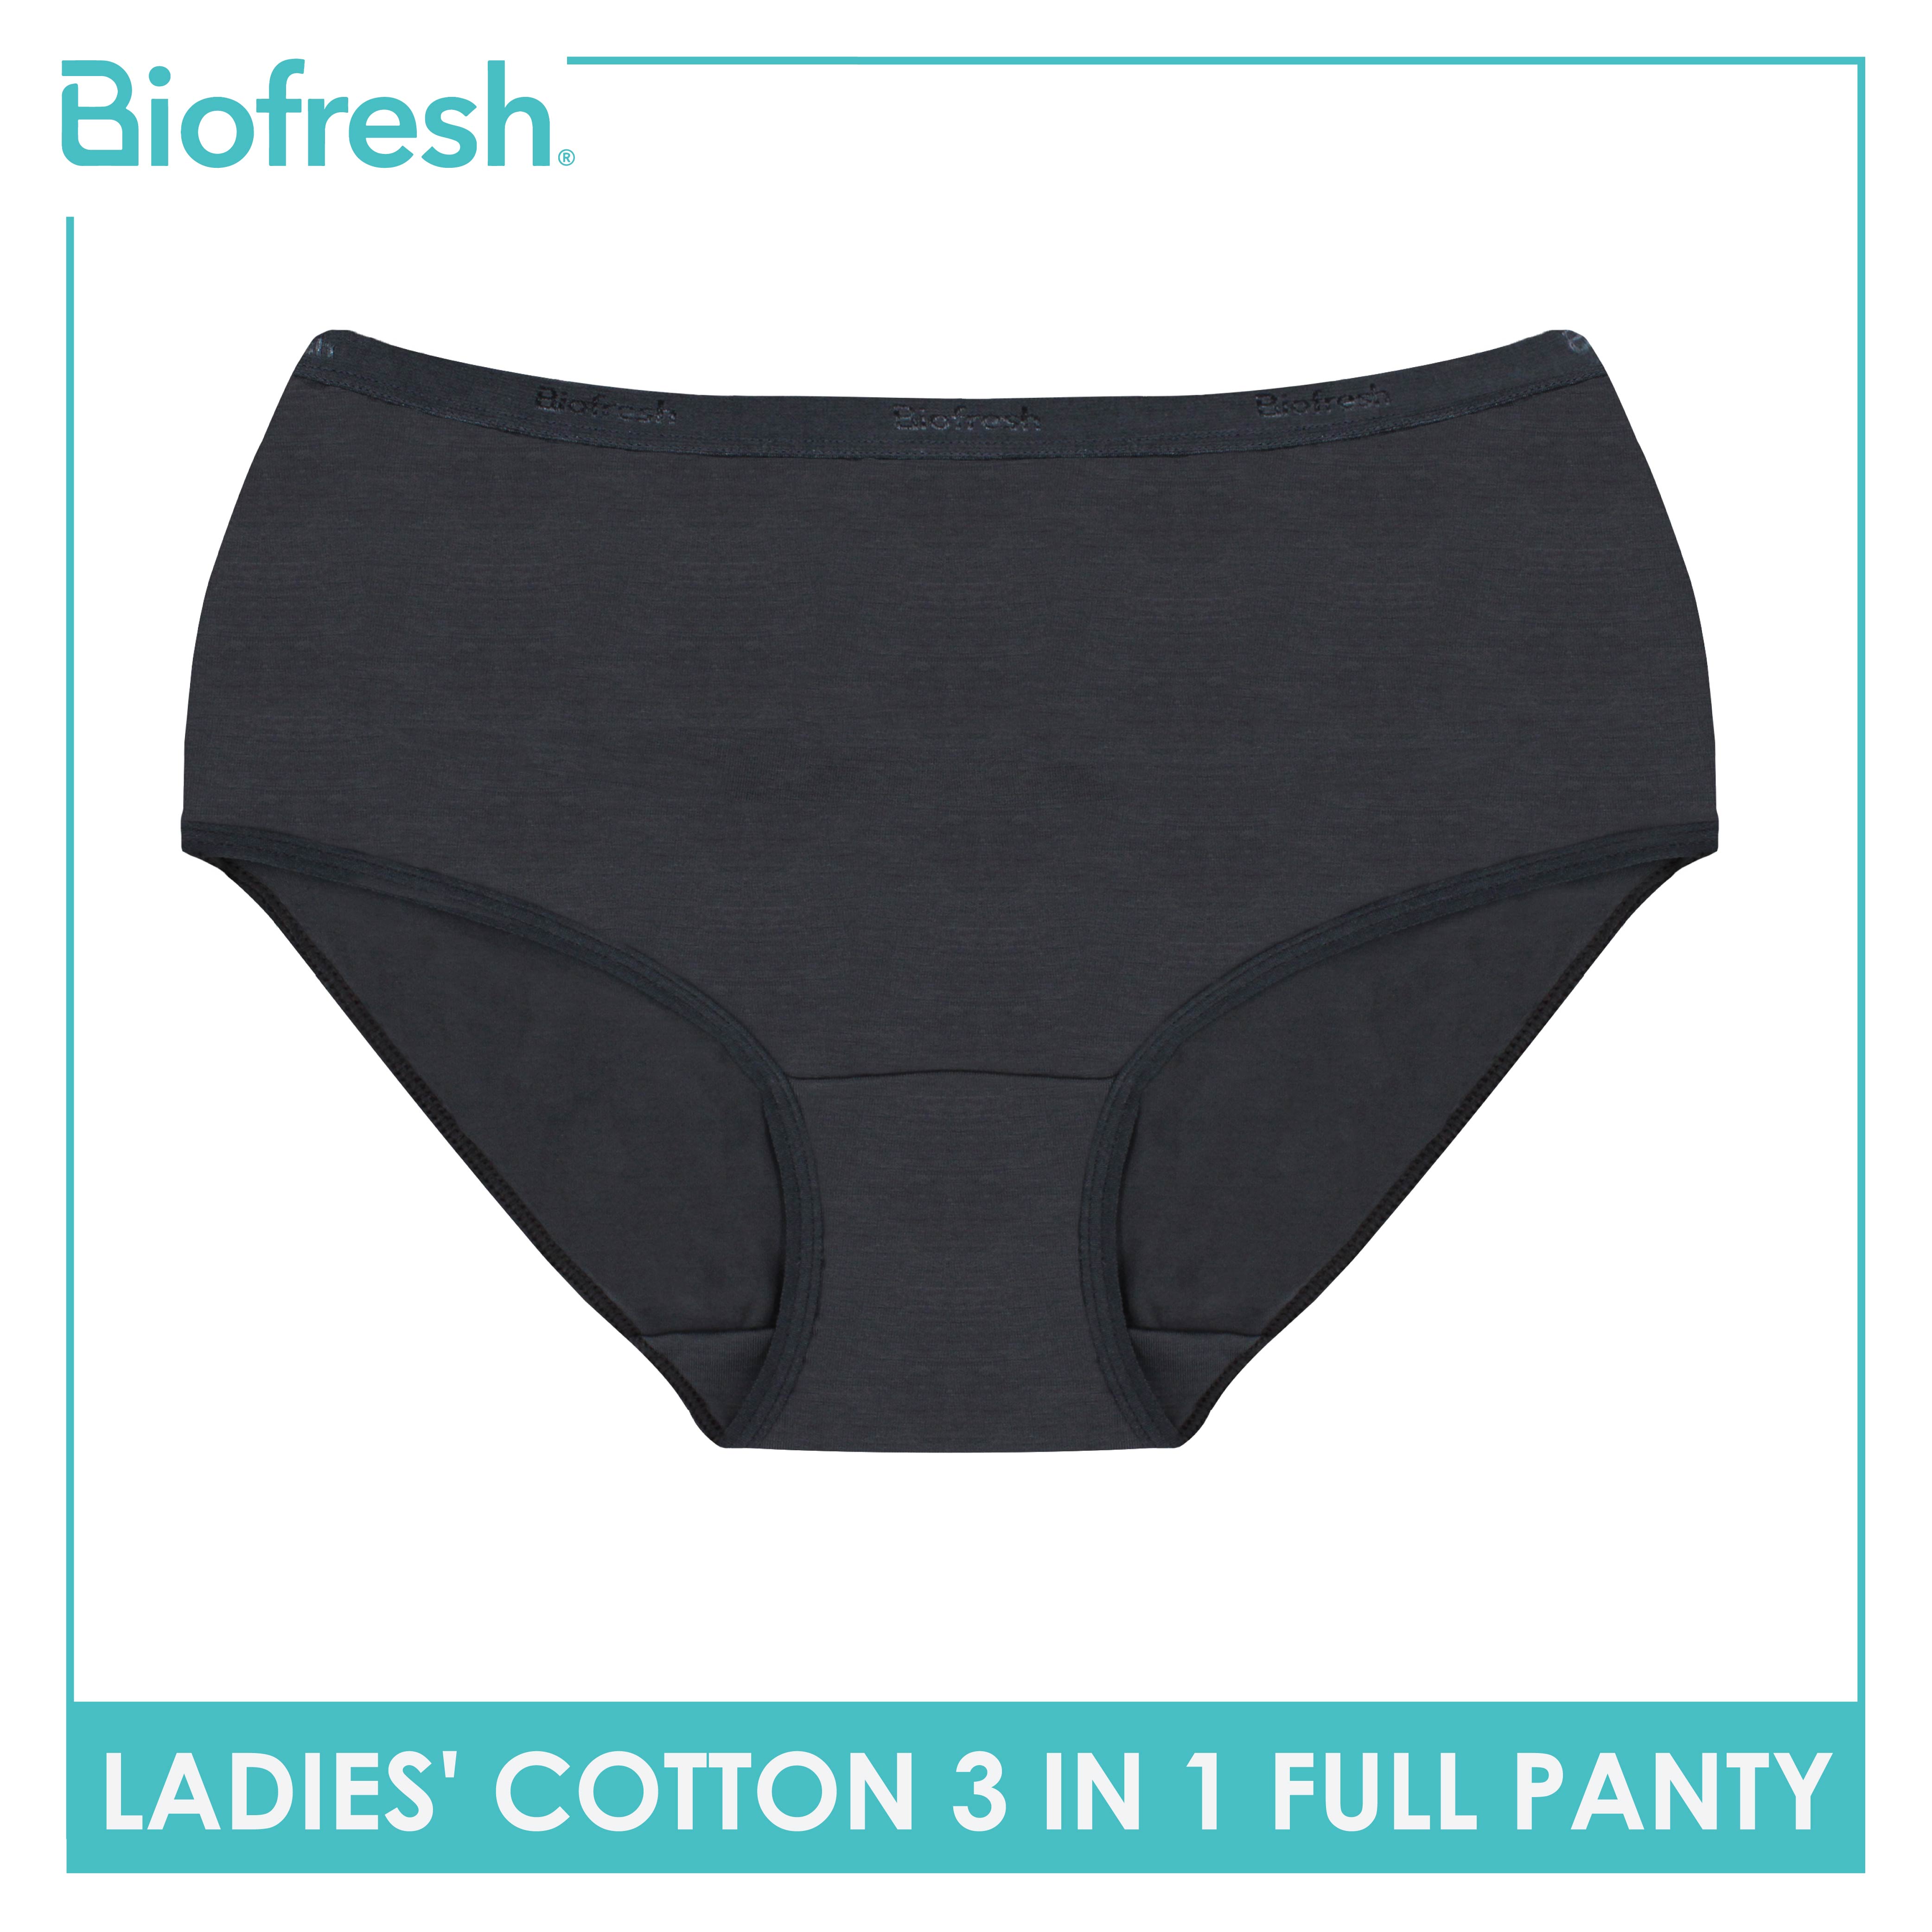 Biofresh Ladies' Antimicrobial Modal Cotton Boyleg Panty 3 pieces in a pack  ULPBG14